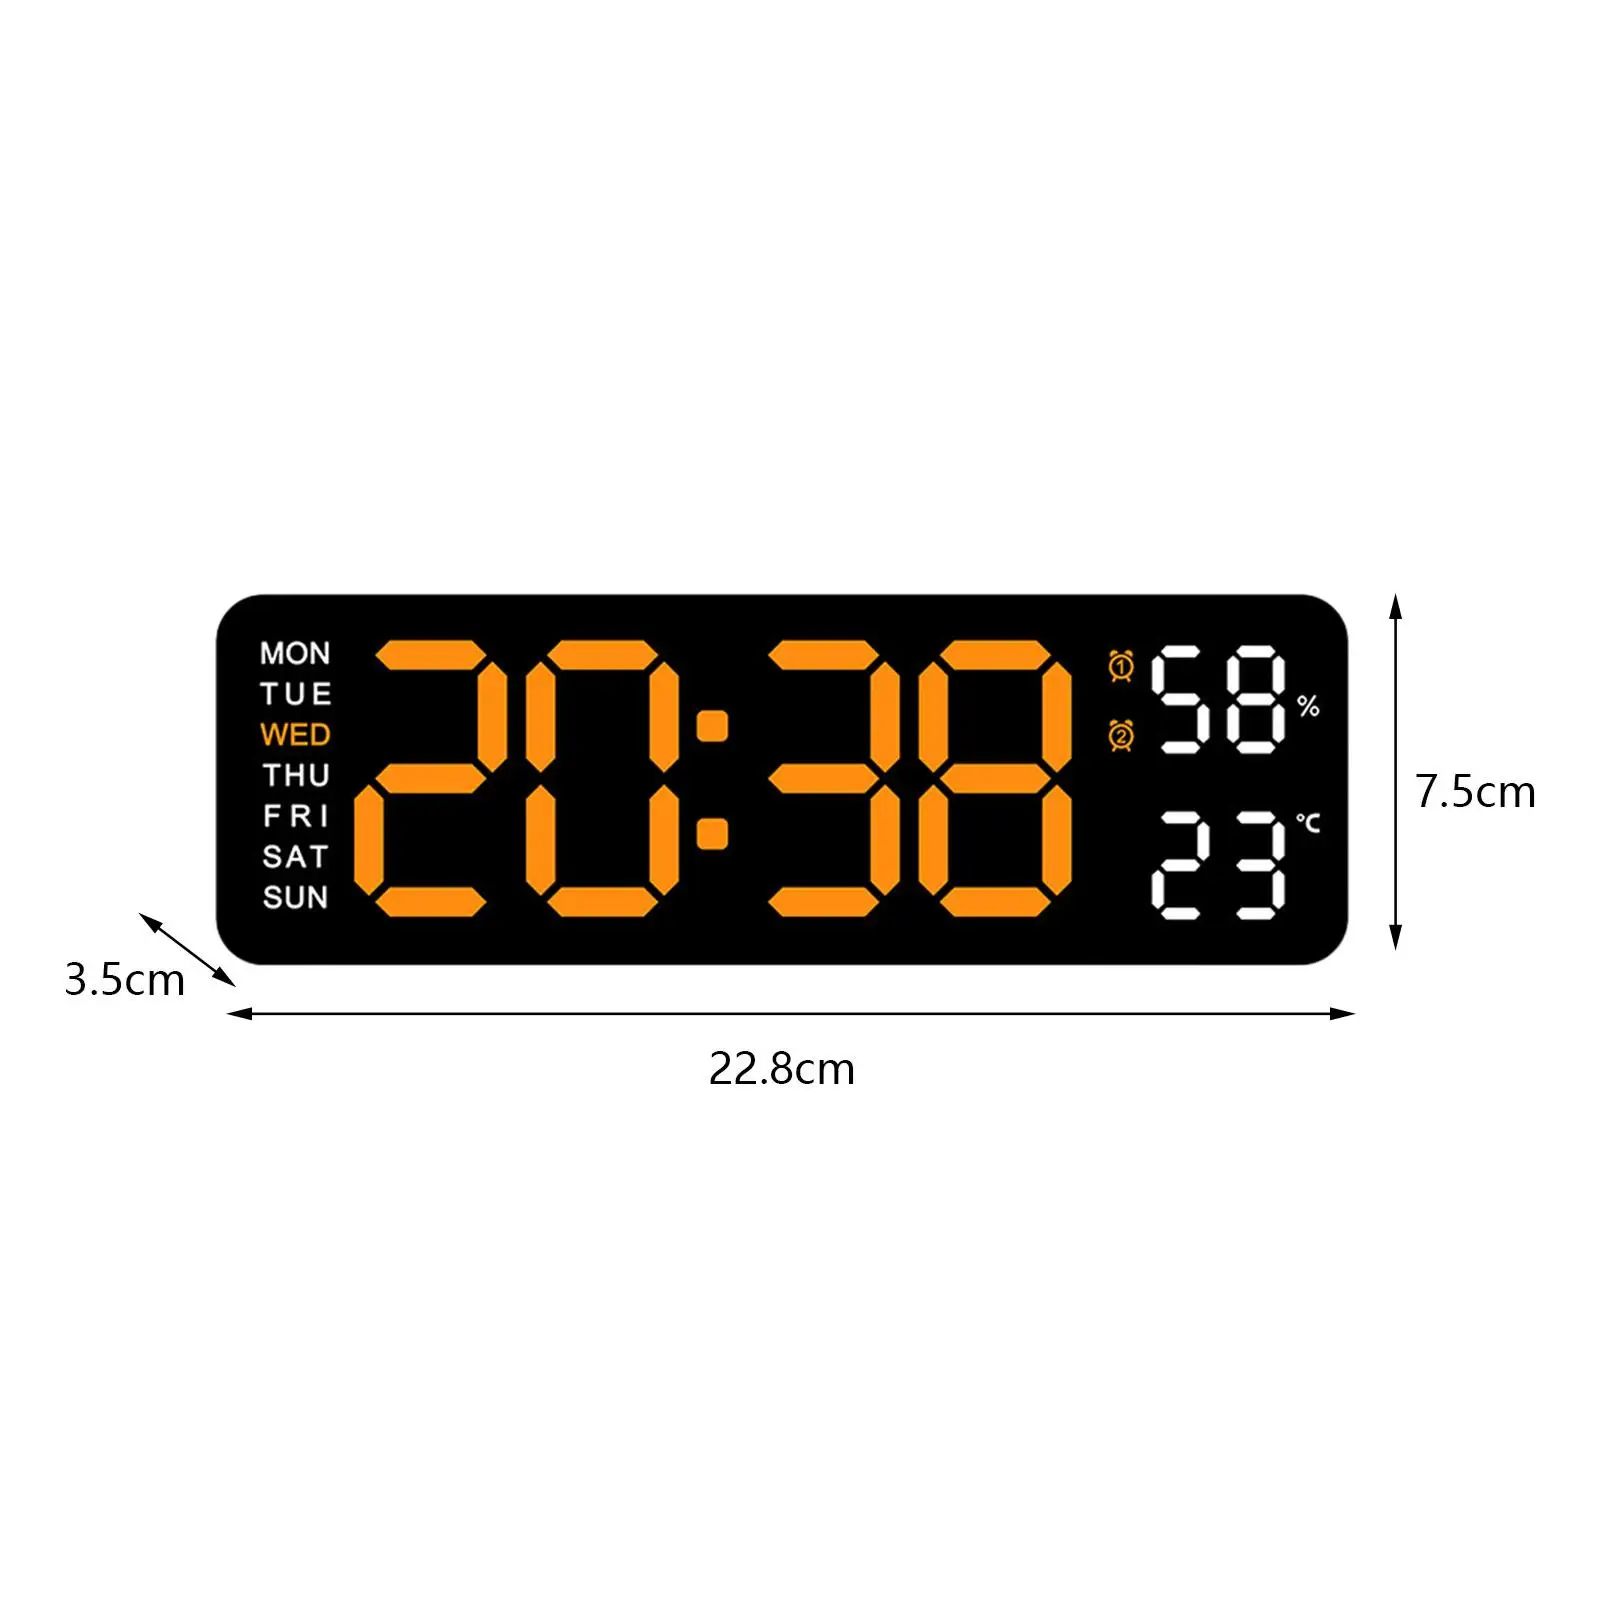 Desk Clock Brightness Adjustable Large Display Hanging Week Digital Wall Clock